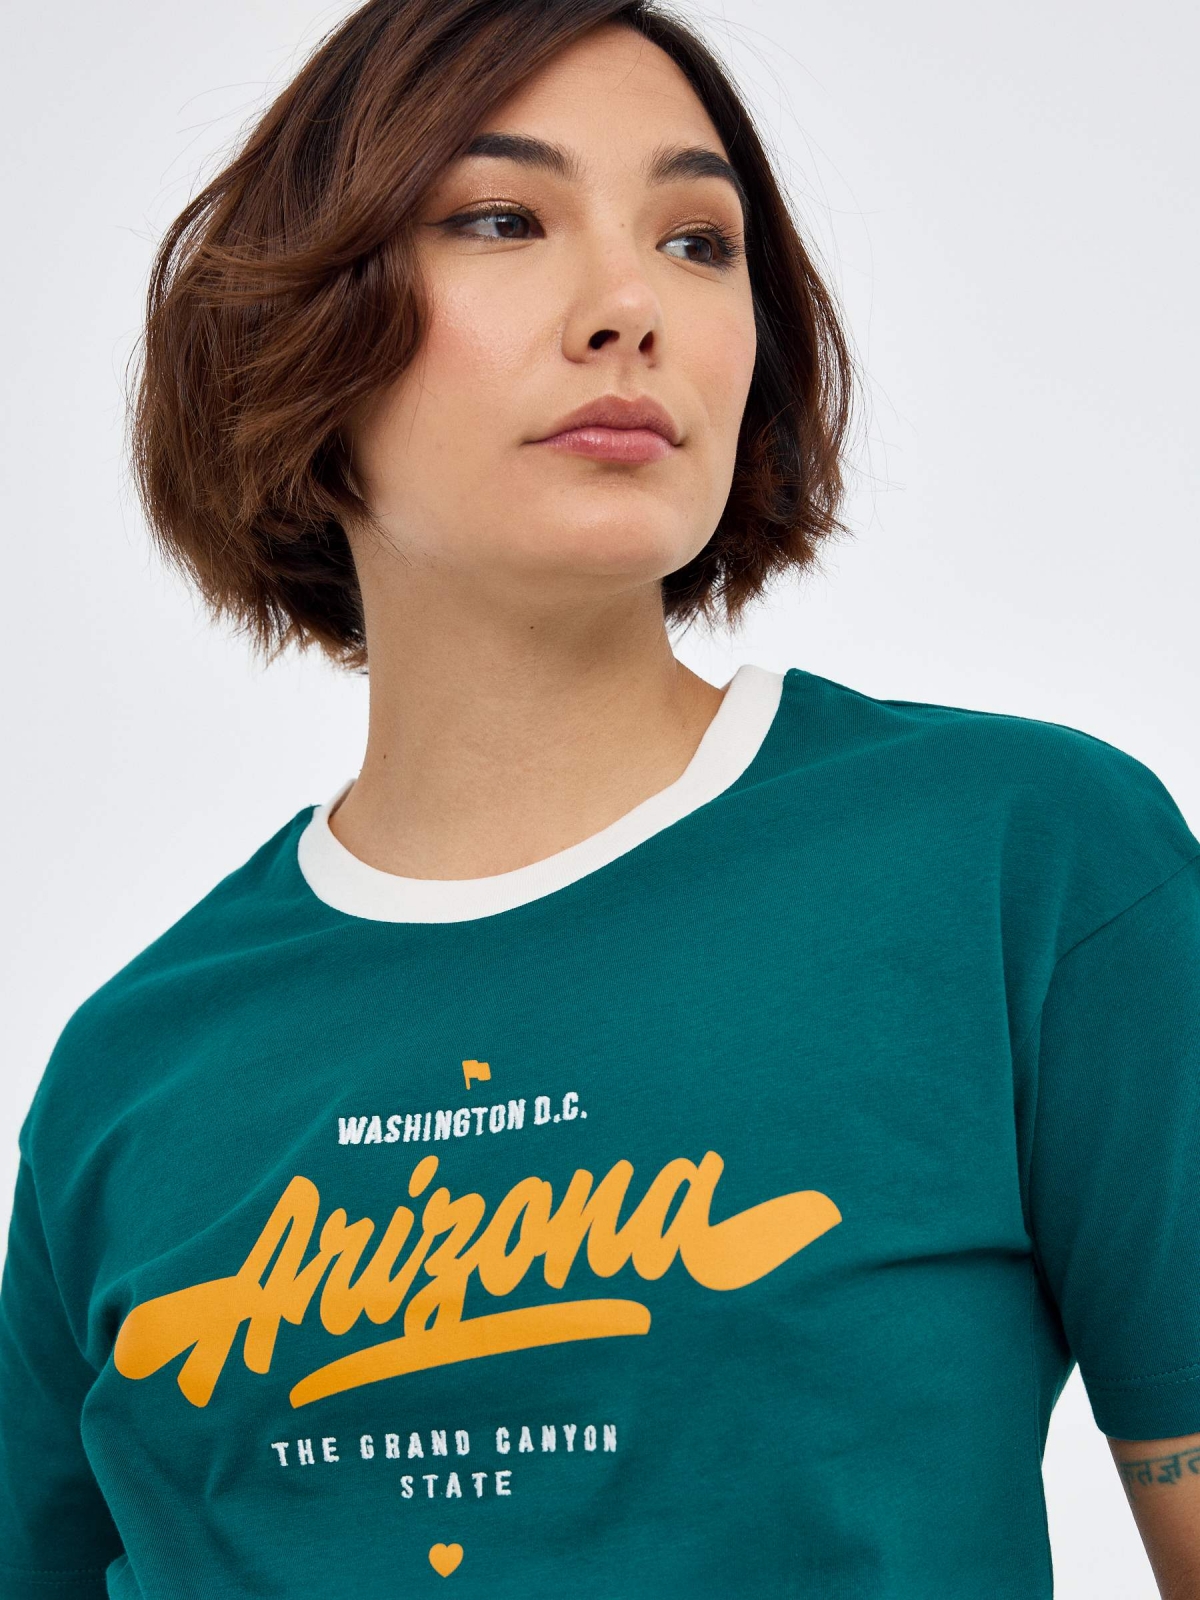 Camiseta Arizona esmeralda primer plano